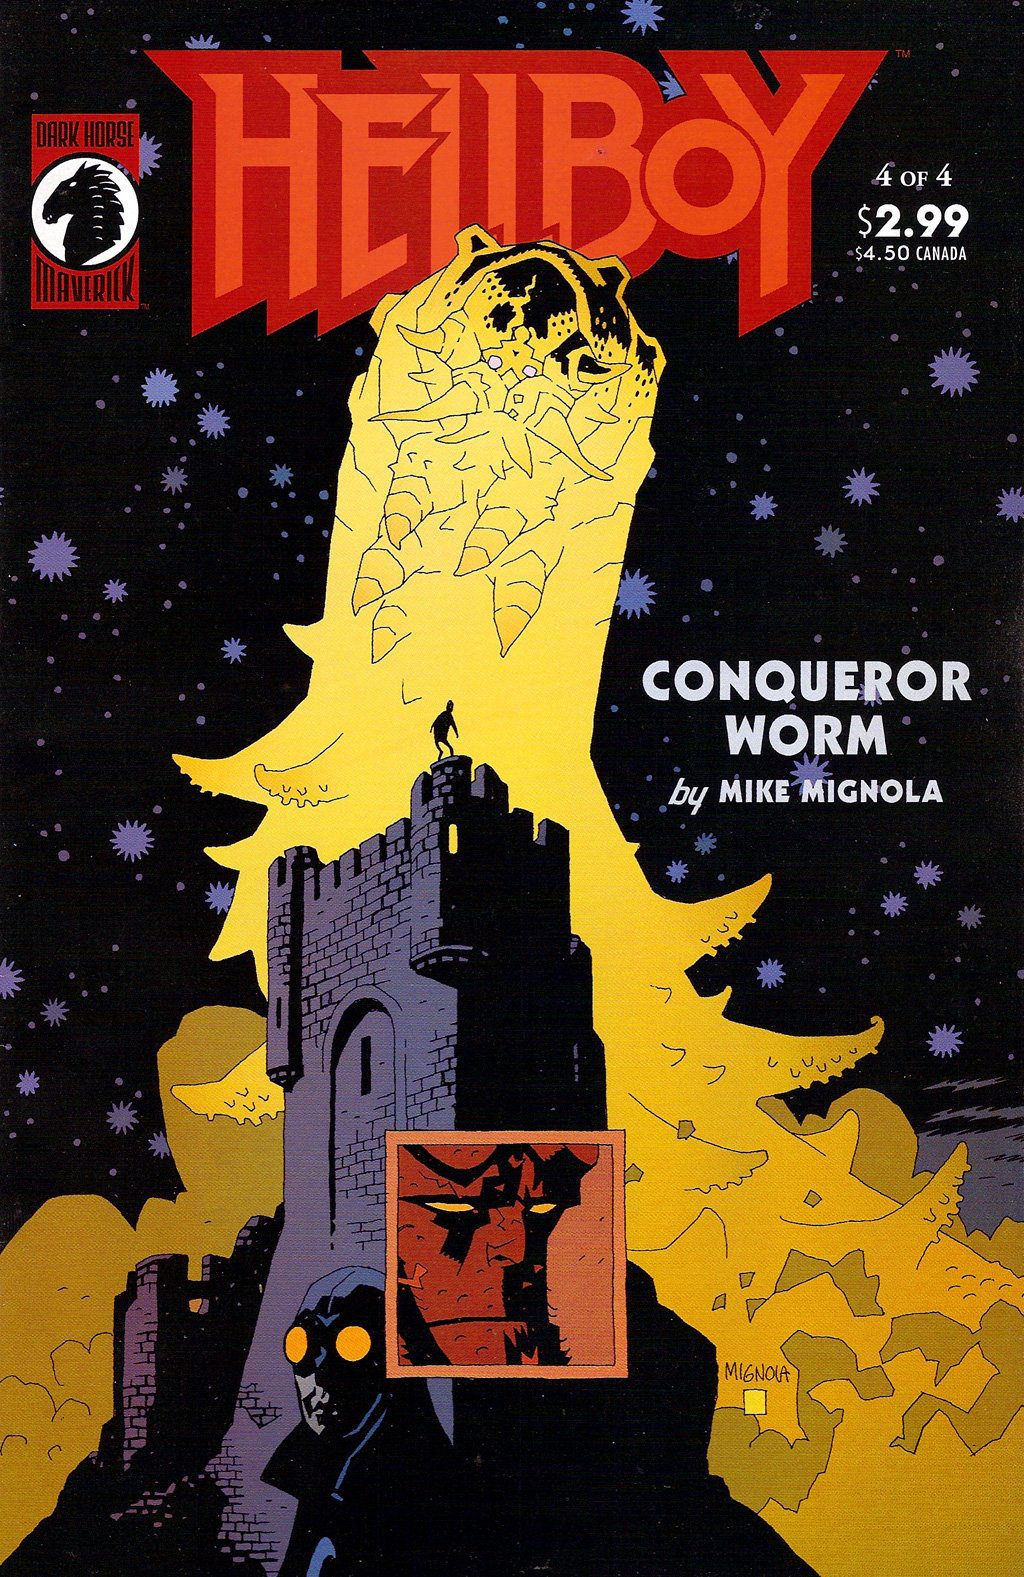 Hellboy: Conqueror Worm Backgrounds, Compatible - PC, Mobile, Gadgets| 1024x1577 px